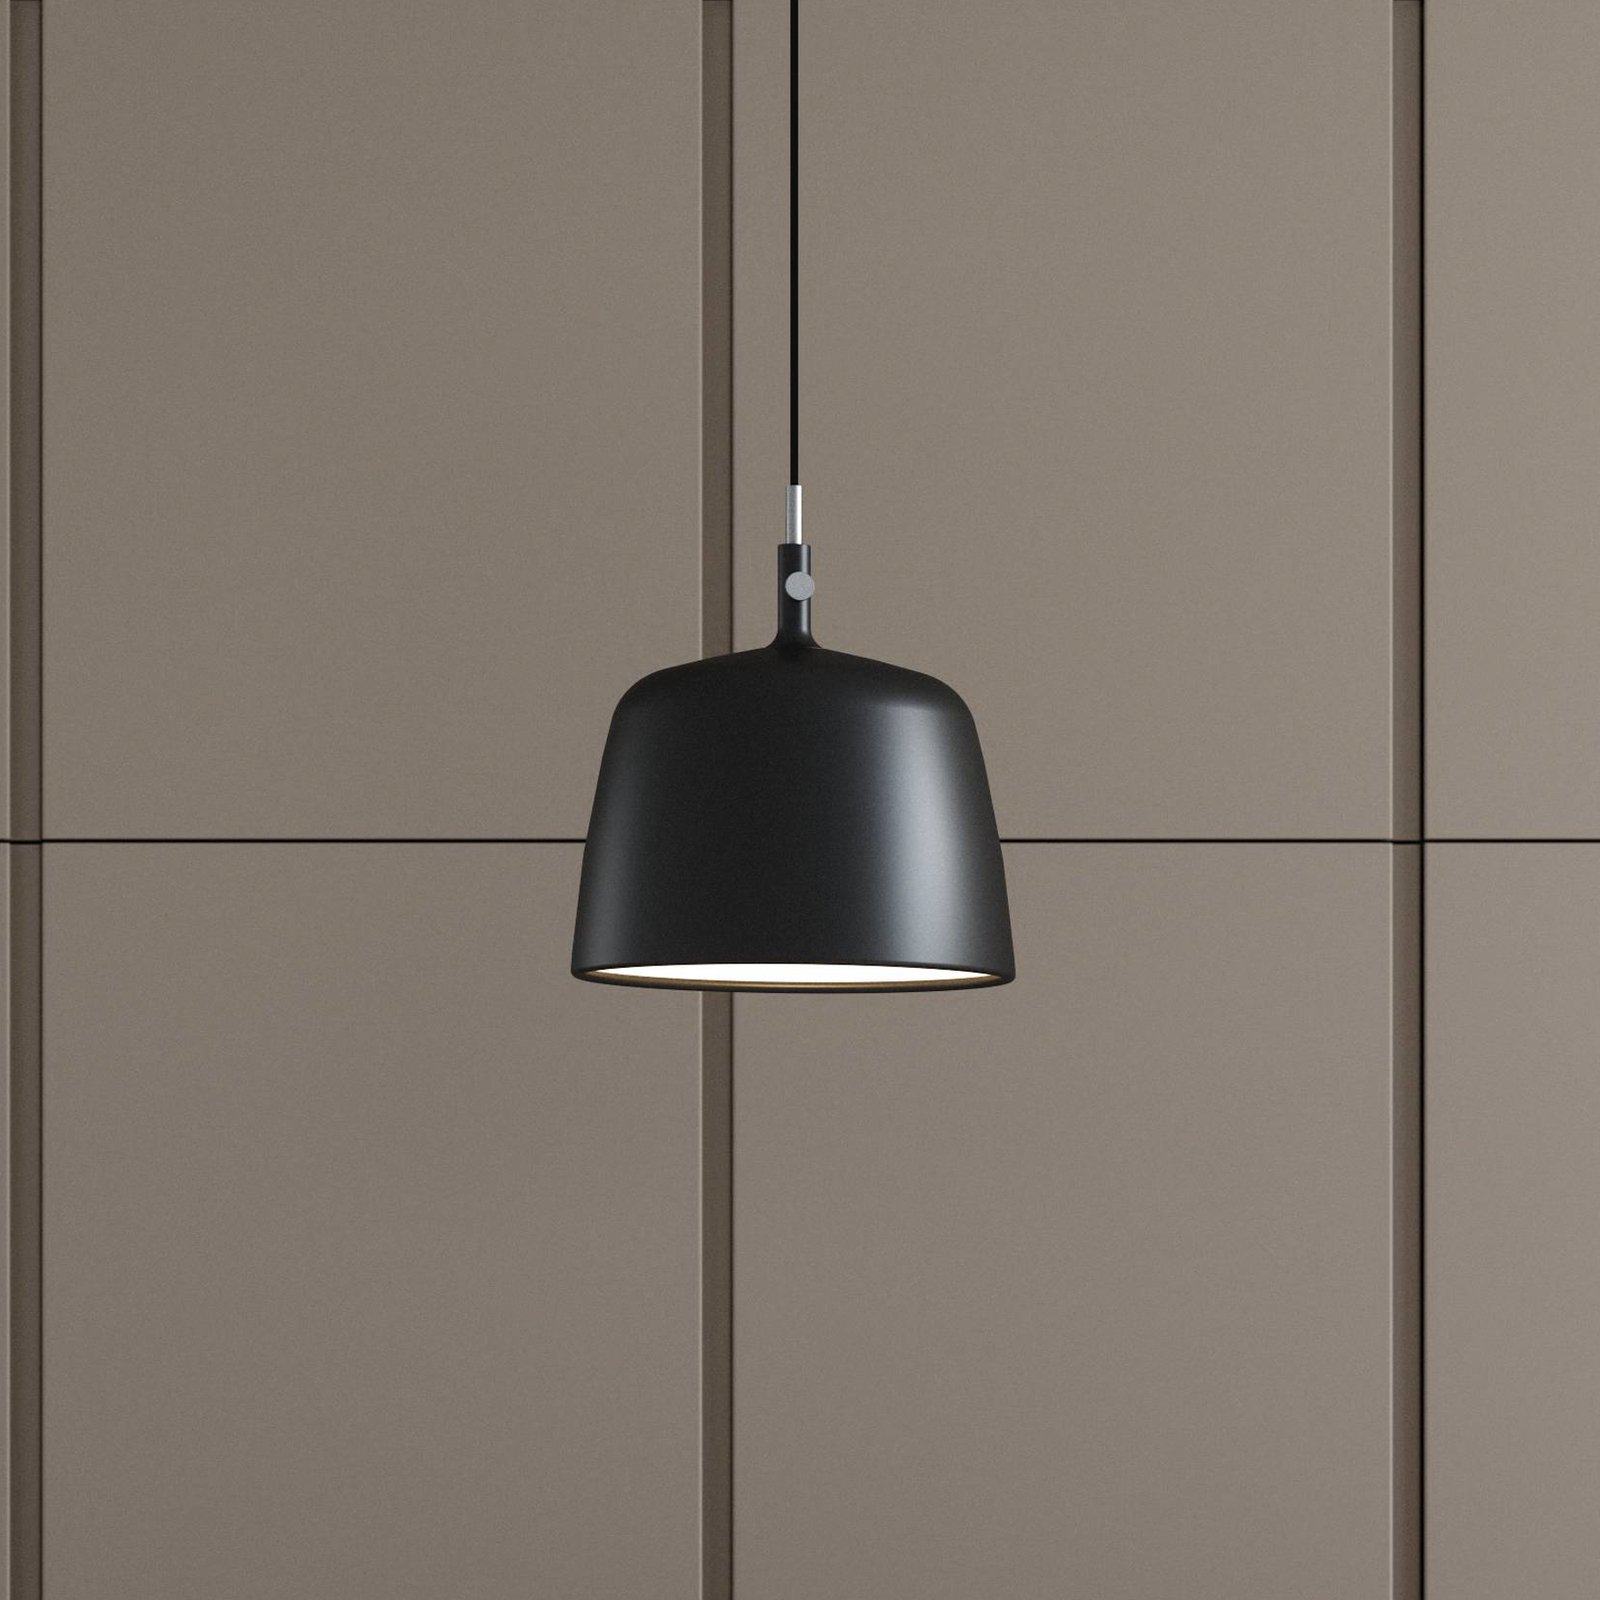 Hanglamp Norbi, zwart, Ø 30 cm